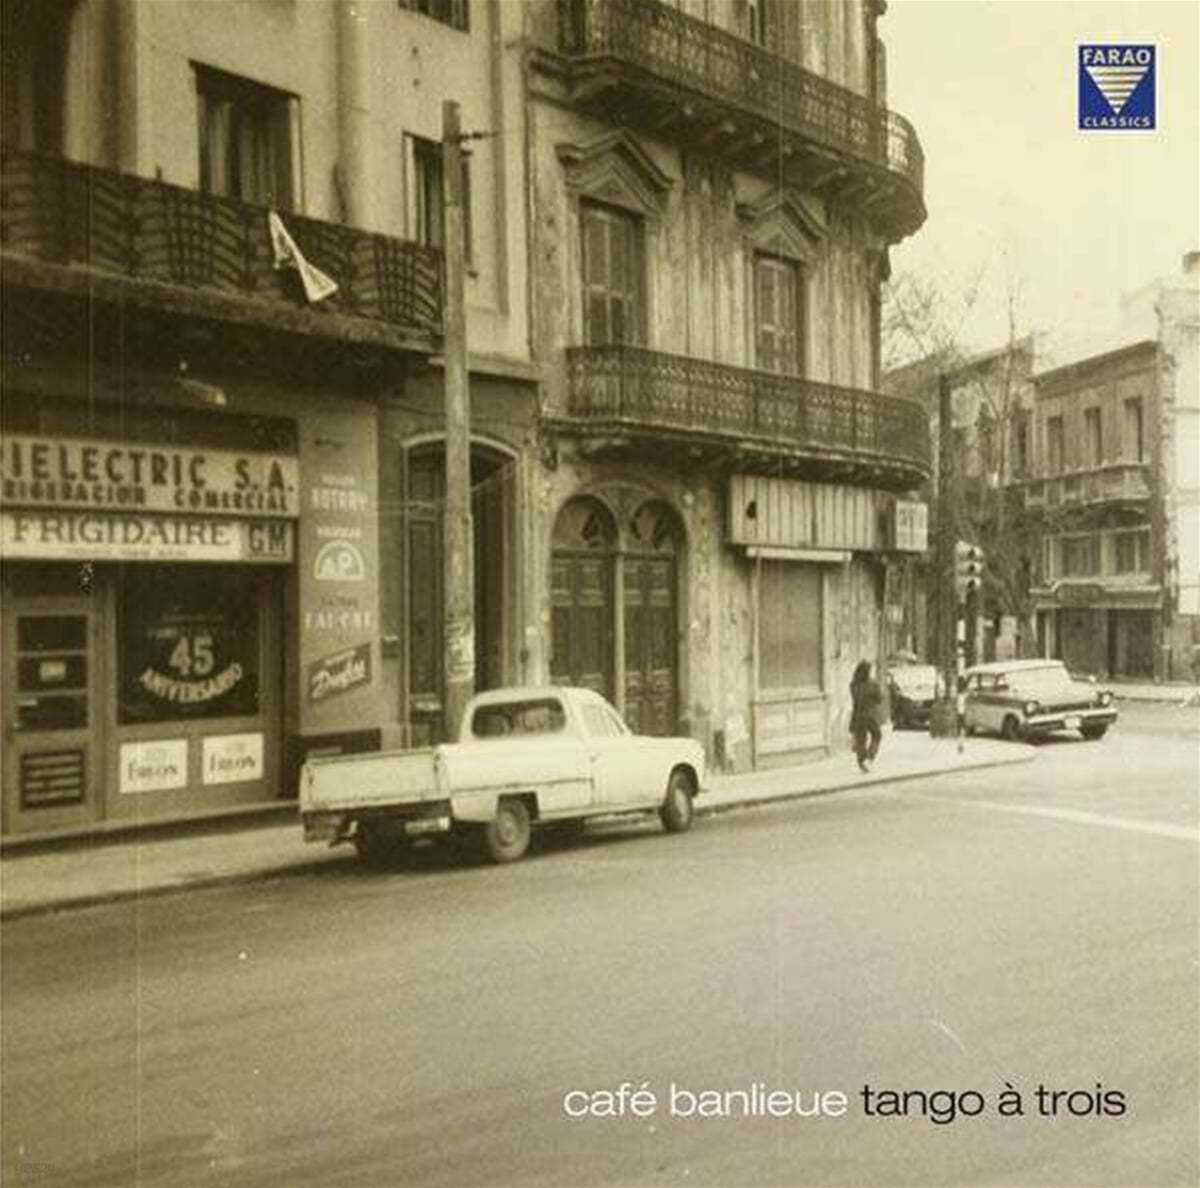 Tango A Trois 페터 루트비히: 탱고 앨범 - 변두리 카페 (Peter Ludwig: Cafe Banlieu) [LP] 